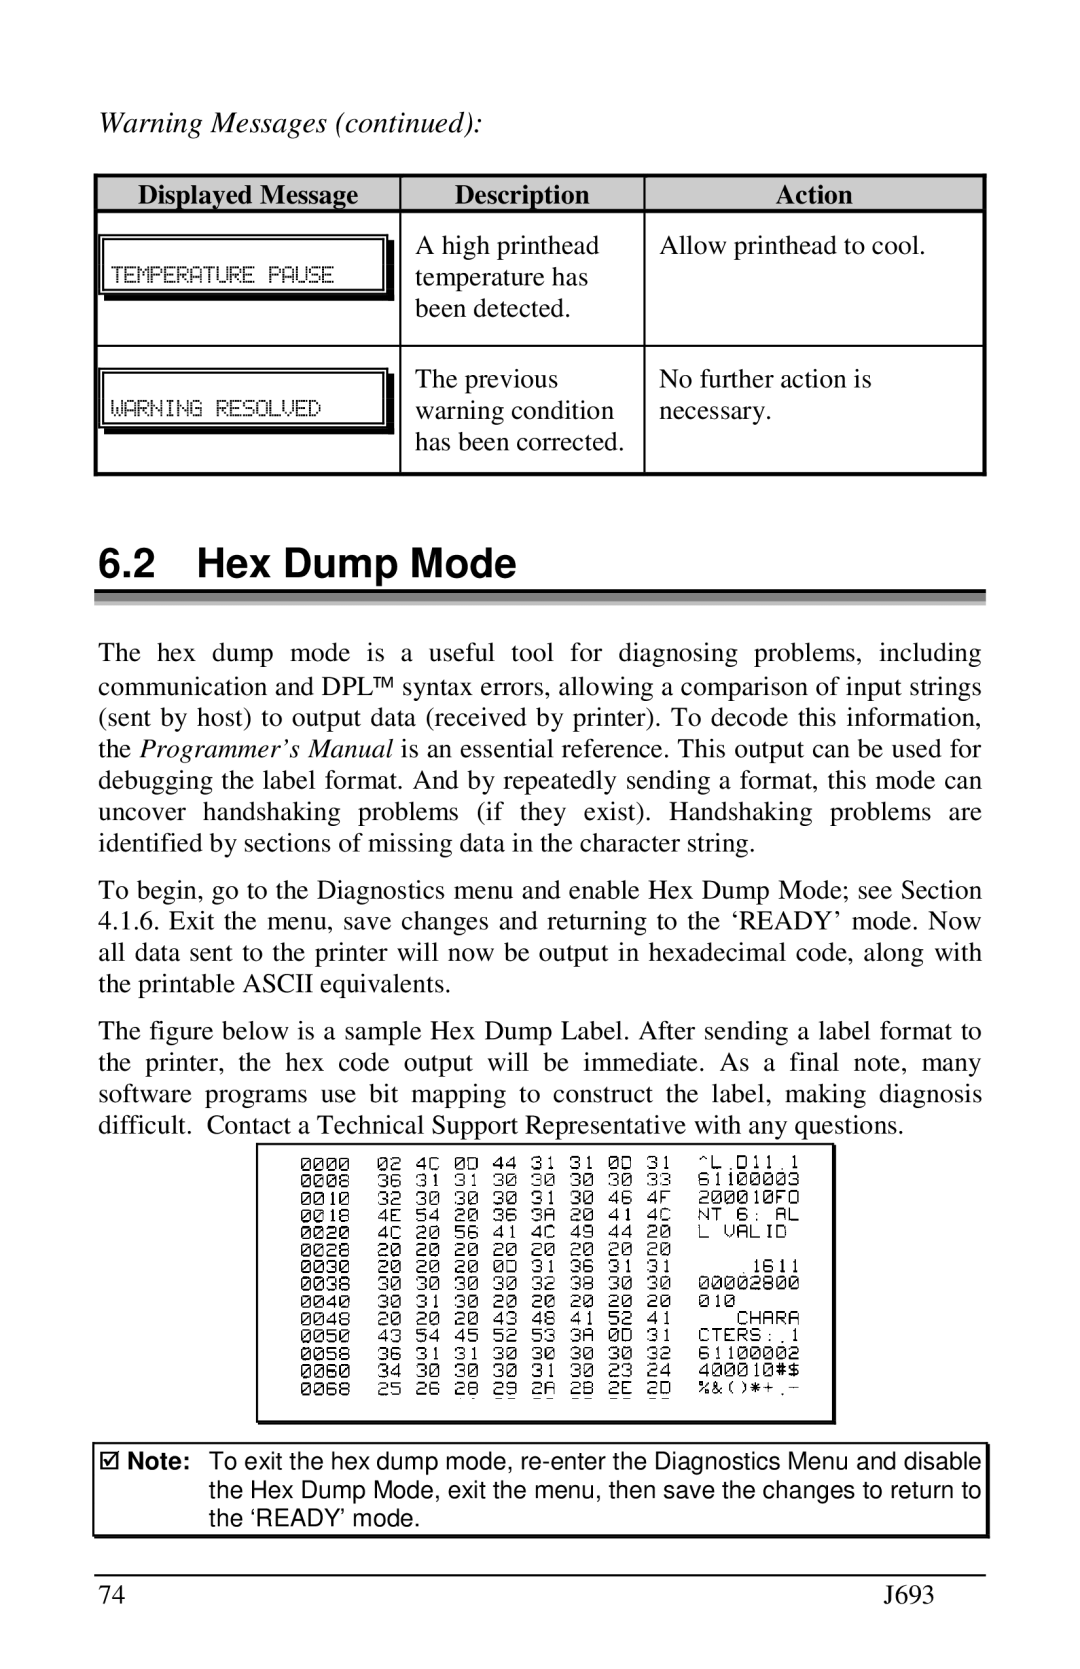 Pitney Bowes J693 manual Hex Dump Mode, Warning Messages continued, Description, Action 